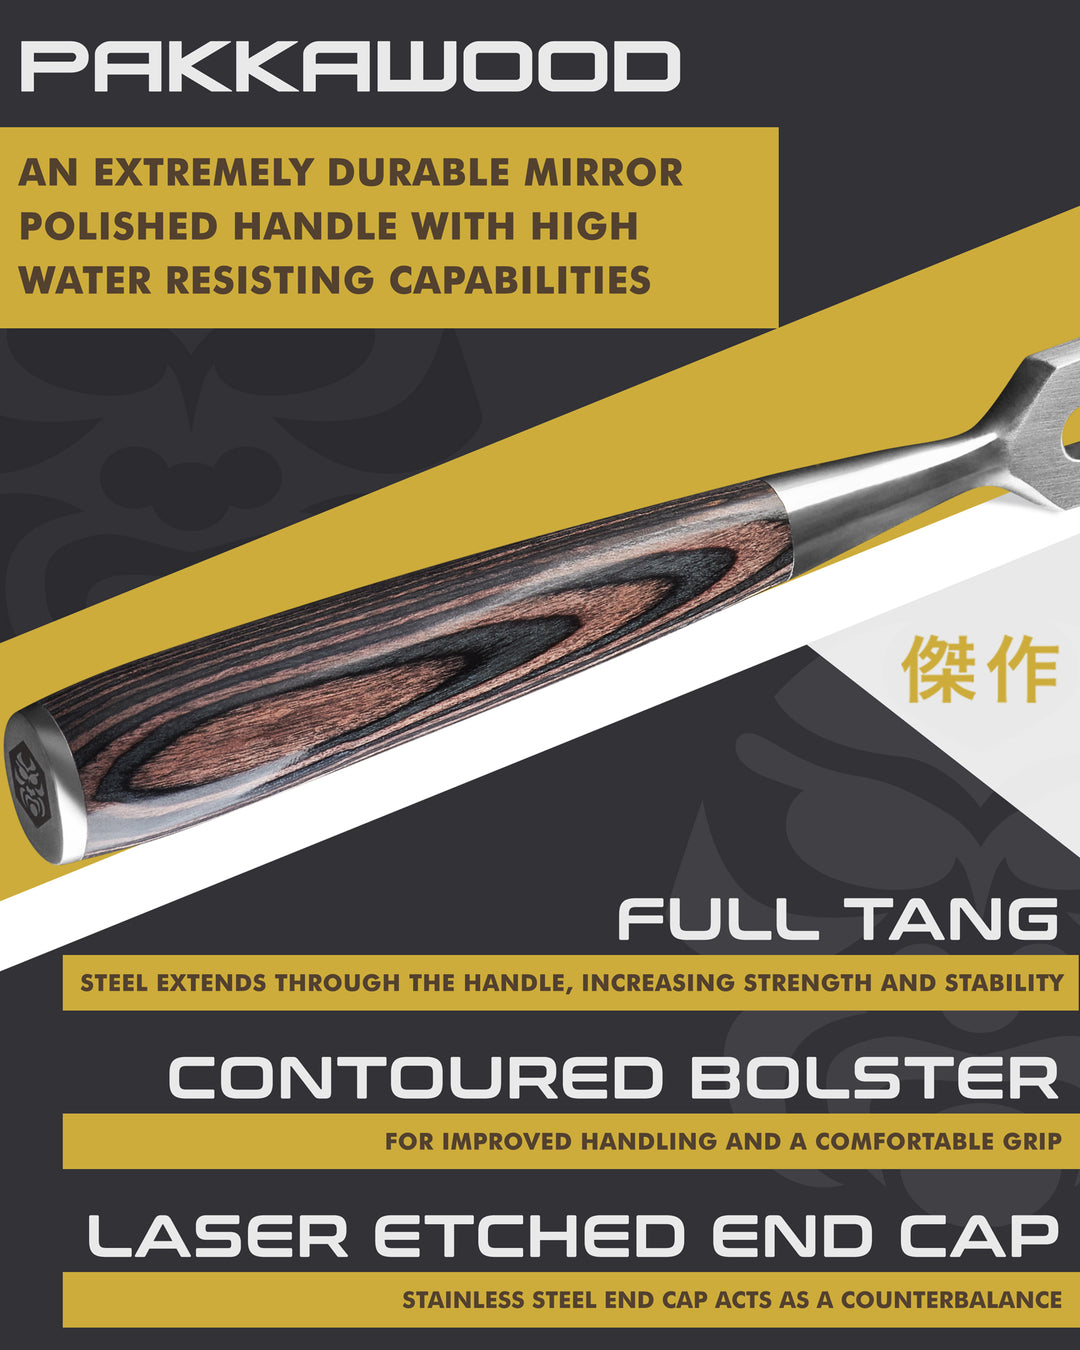 Kessaku Samurai Carving Fork handle features: Pakkawood handle, full tang, contoured bolster, laser etched end cap